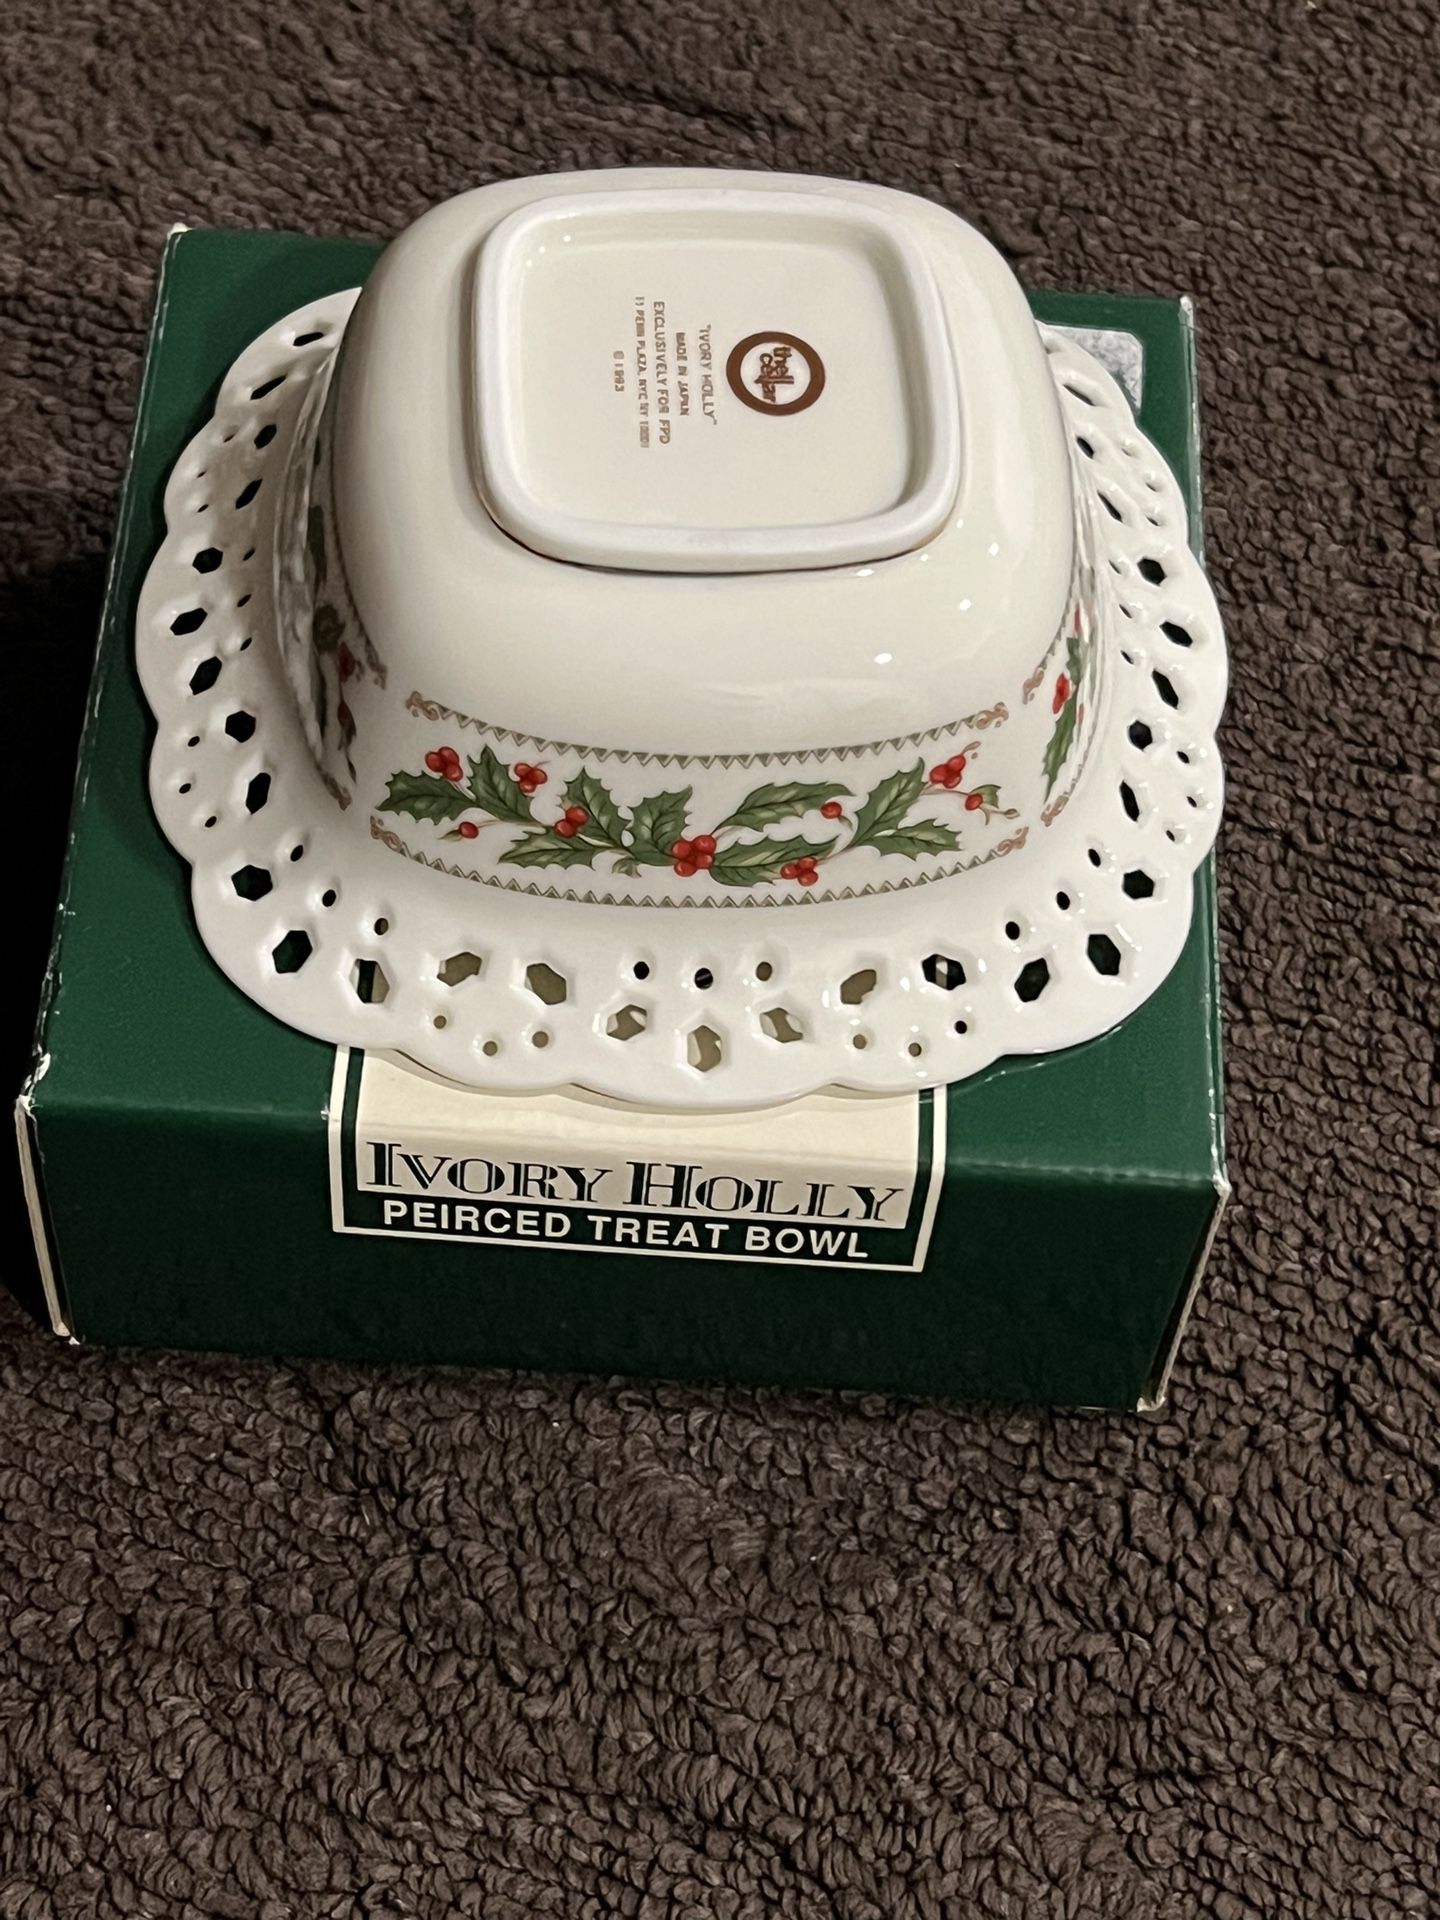 Ivory Holly  Christmas treat Bowl 